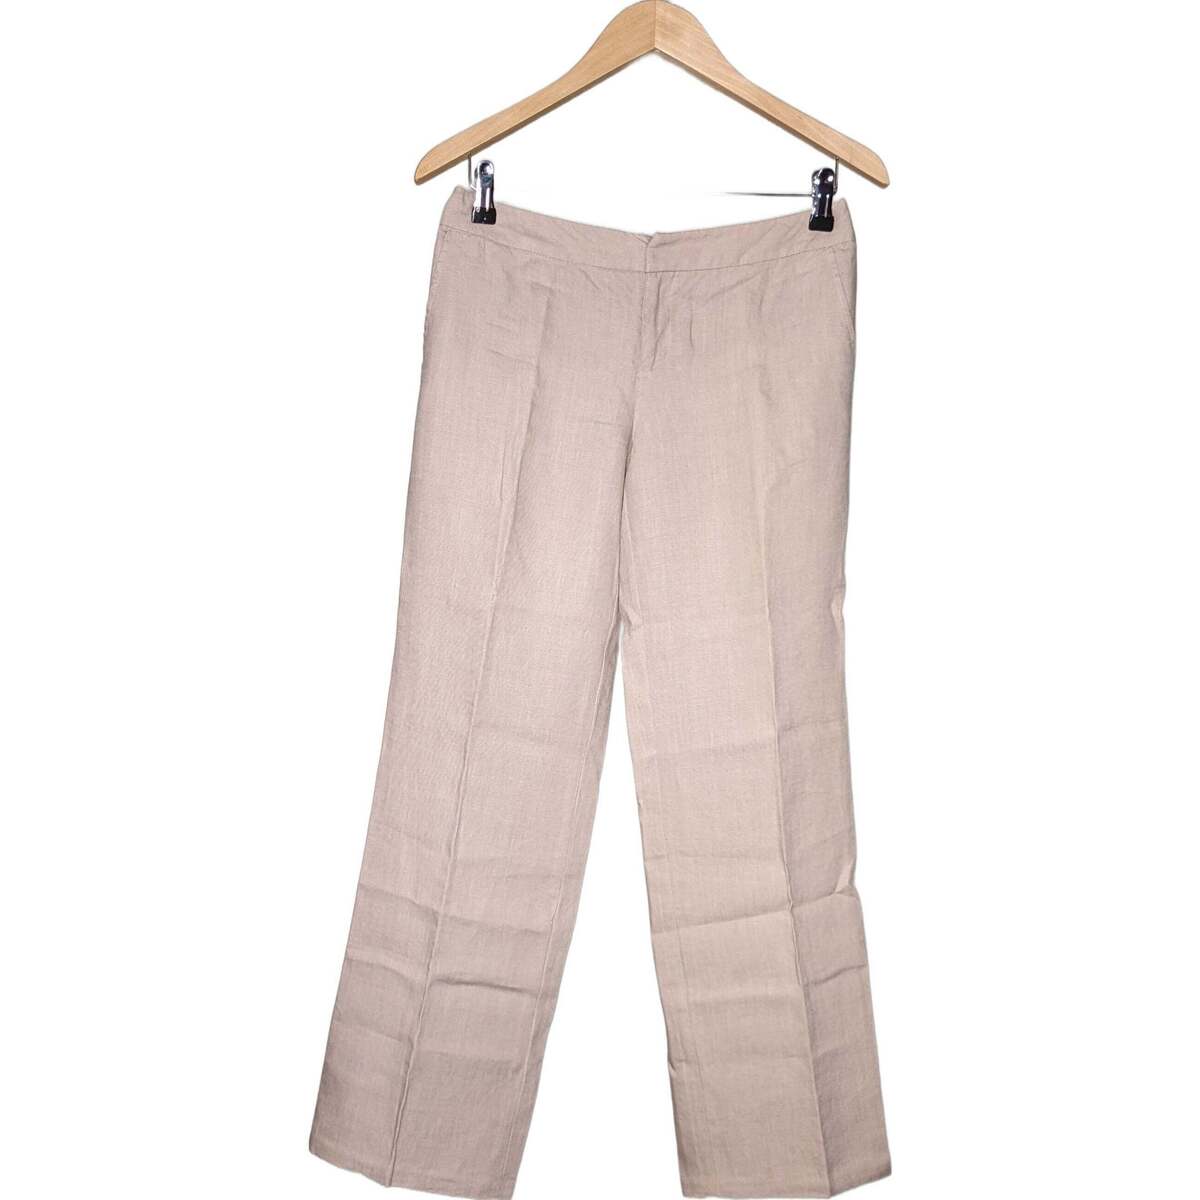 Vêtements Femme Pantalons Naf Naf 34 - T0 - XS Rose